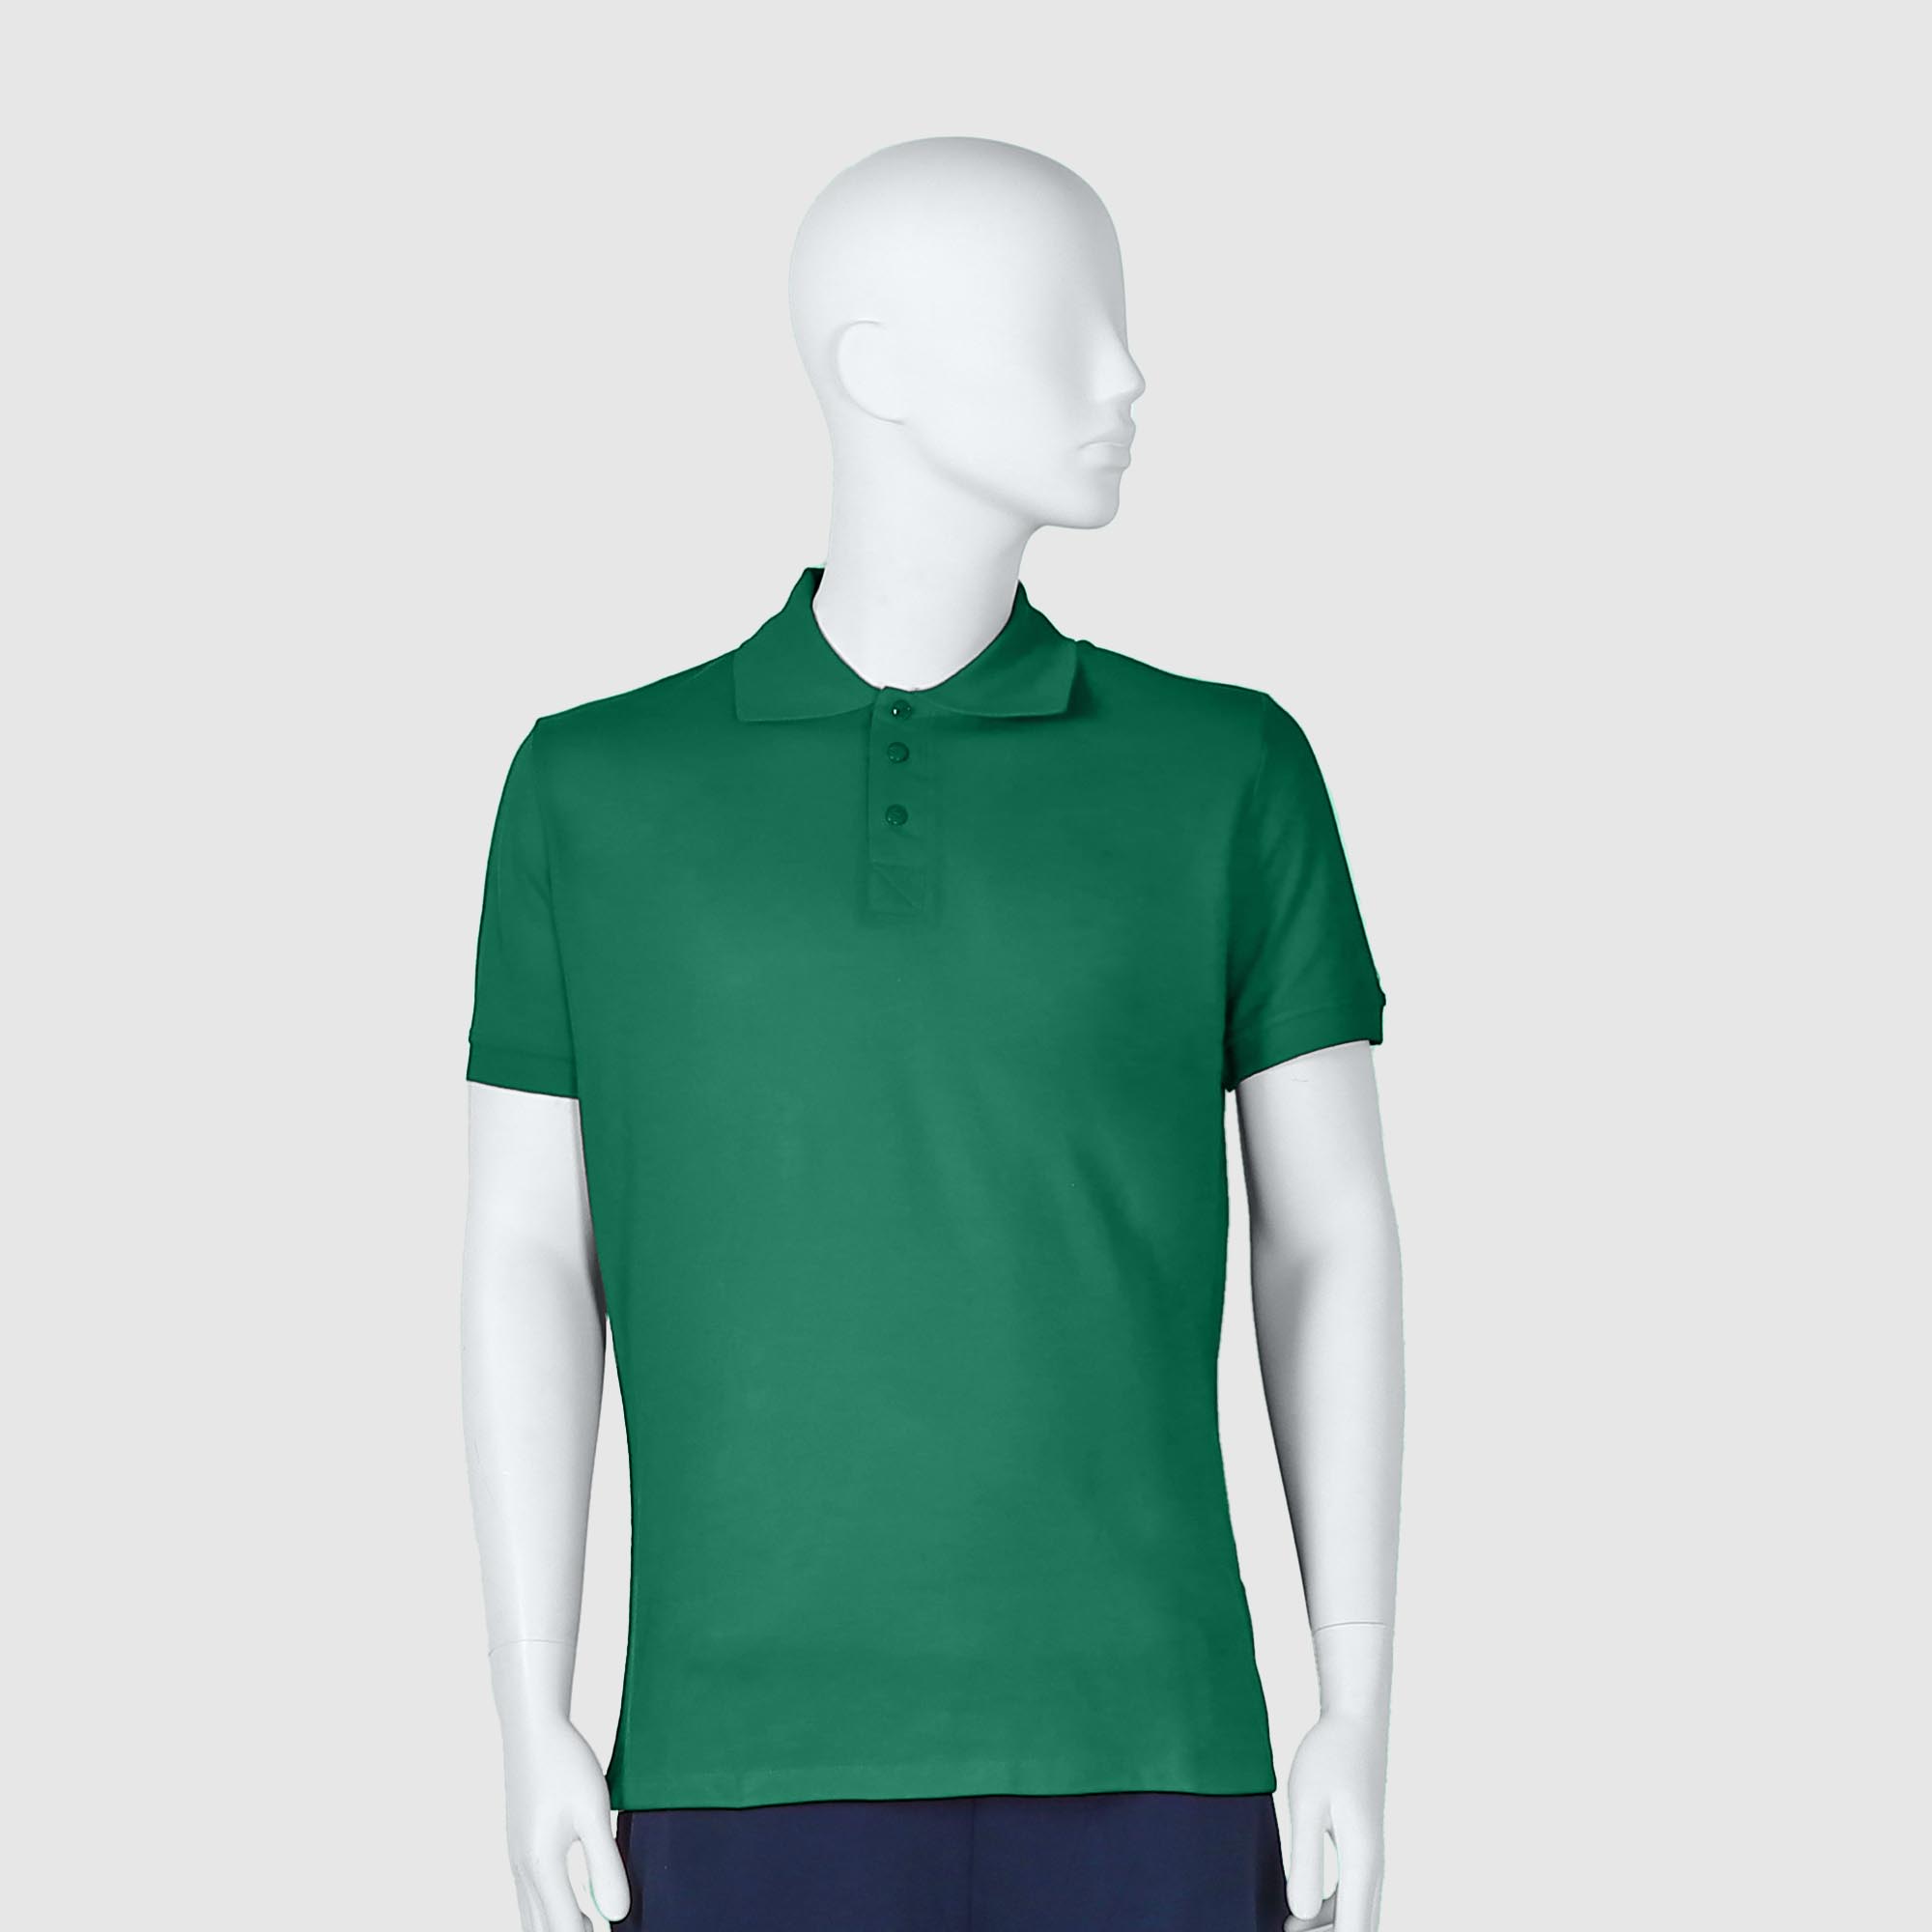 Мужская футболка-поло Diva Teks зелёная (DTD-09), цвет зелёный, размер 48-50